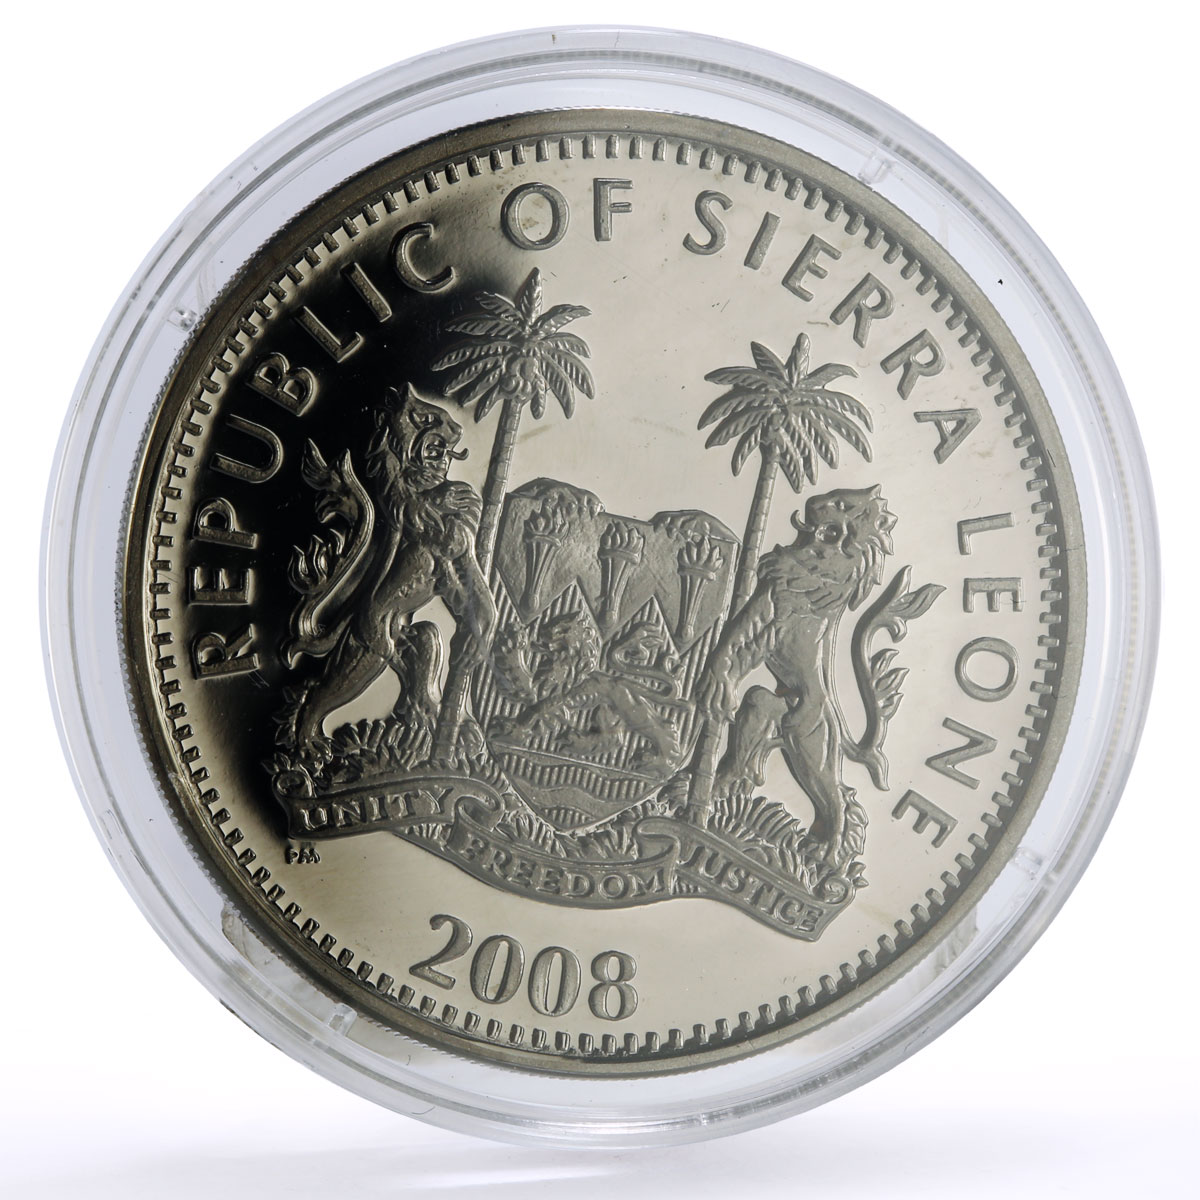 Sierra Leone set of 4 coins Wildlife Nocturnal Animals Fauna silver coins 2008